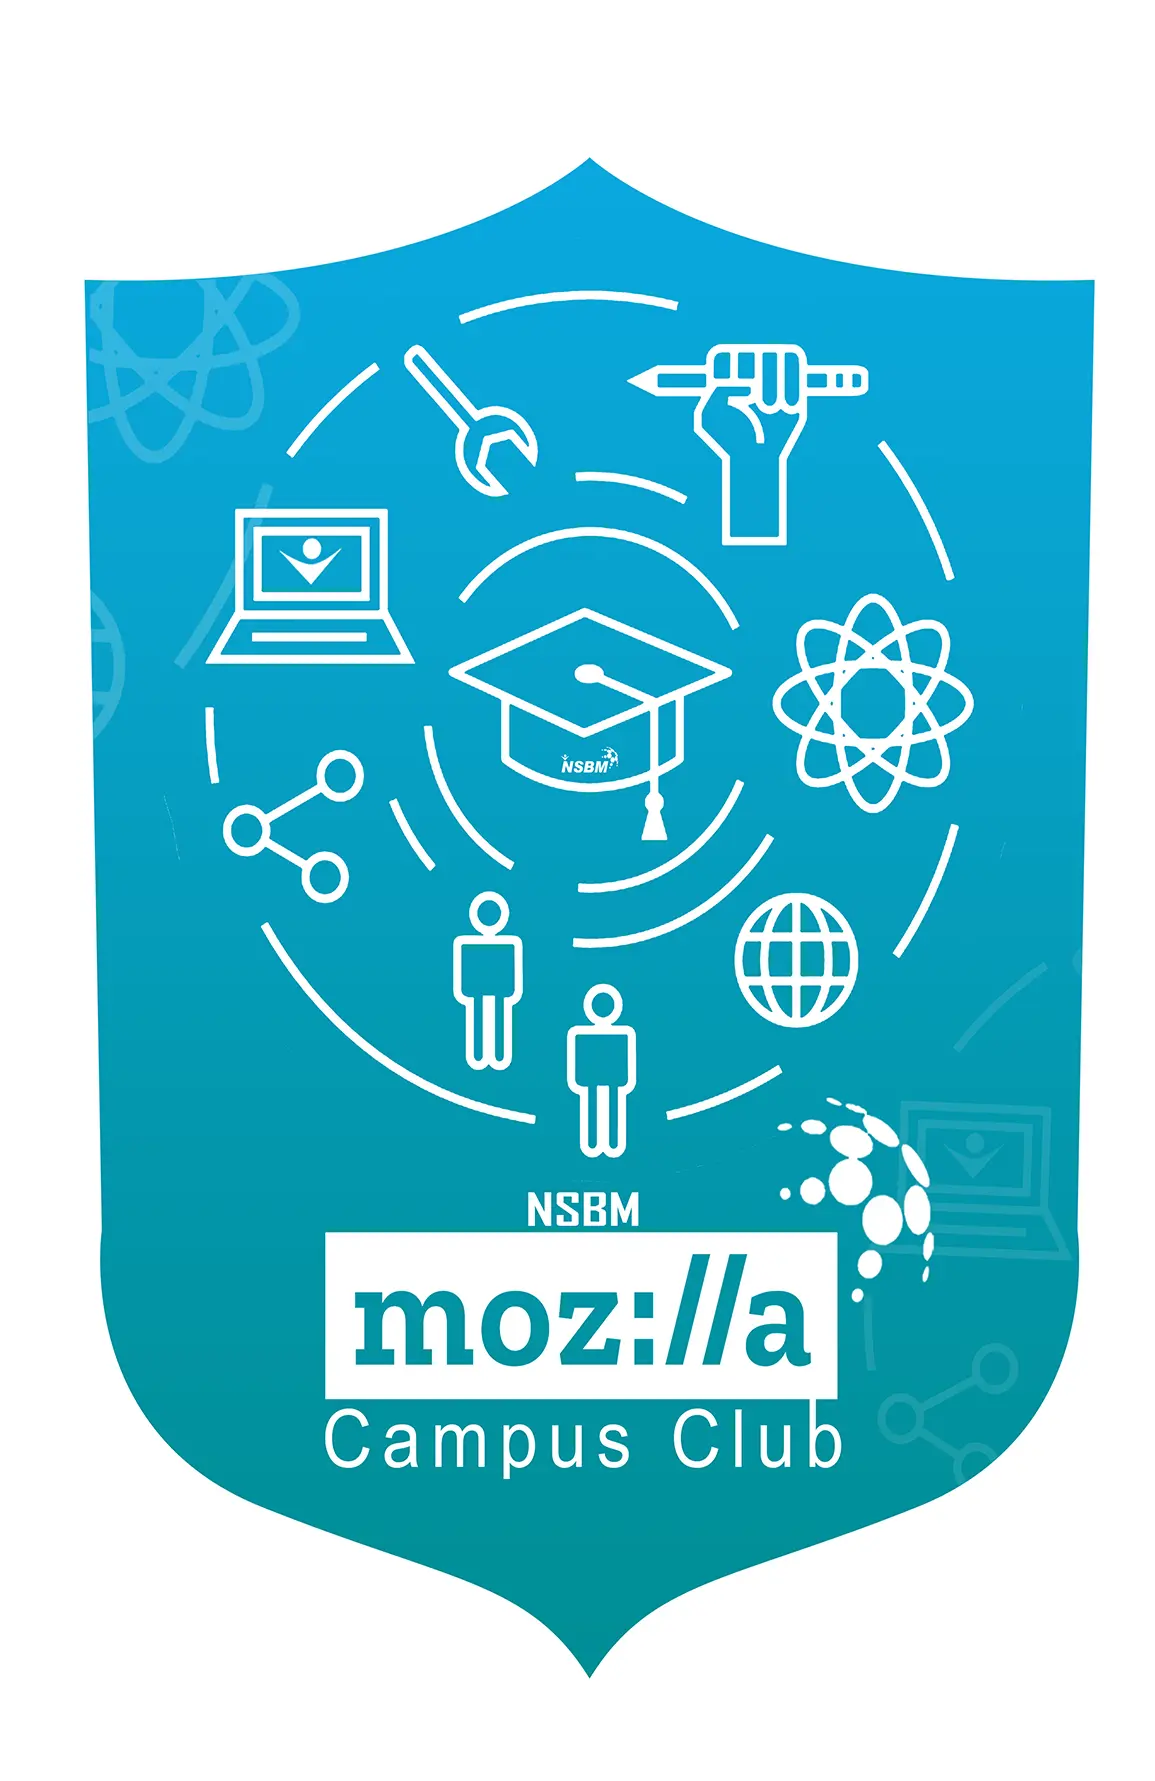 FOSS Community of NSBM - Mozilla Campus Club